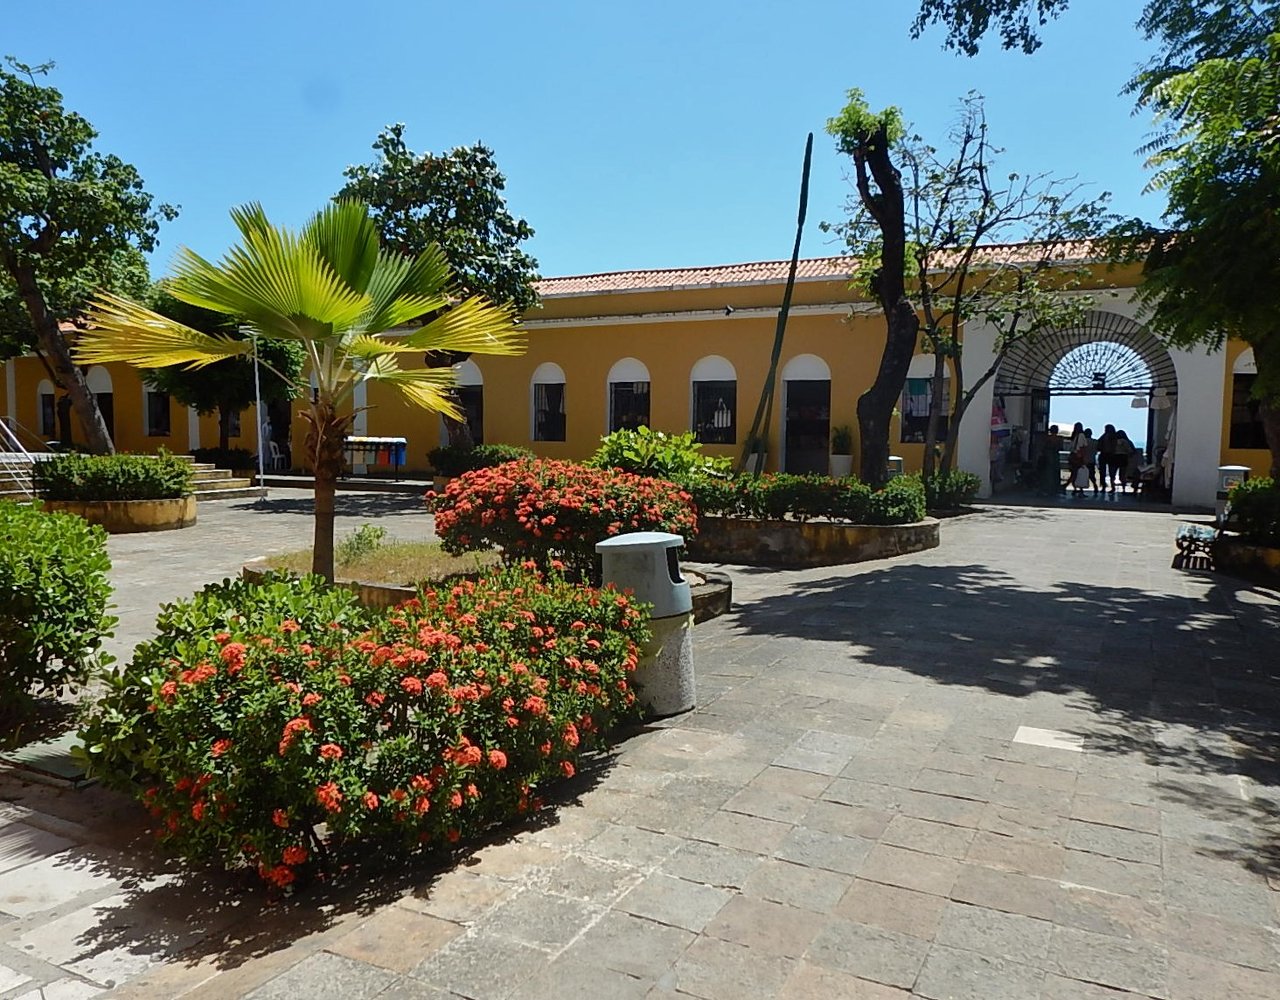 Centro de Turismo do Ceará